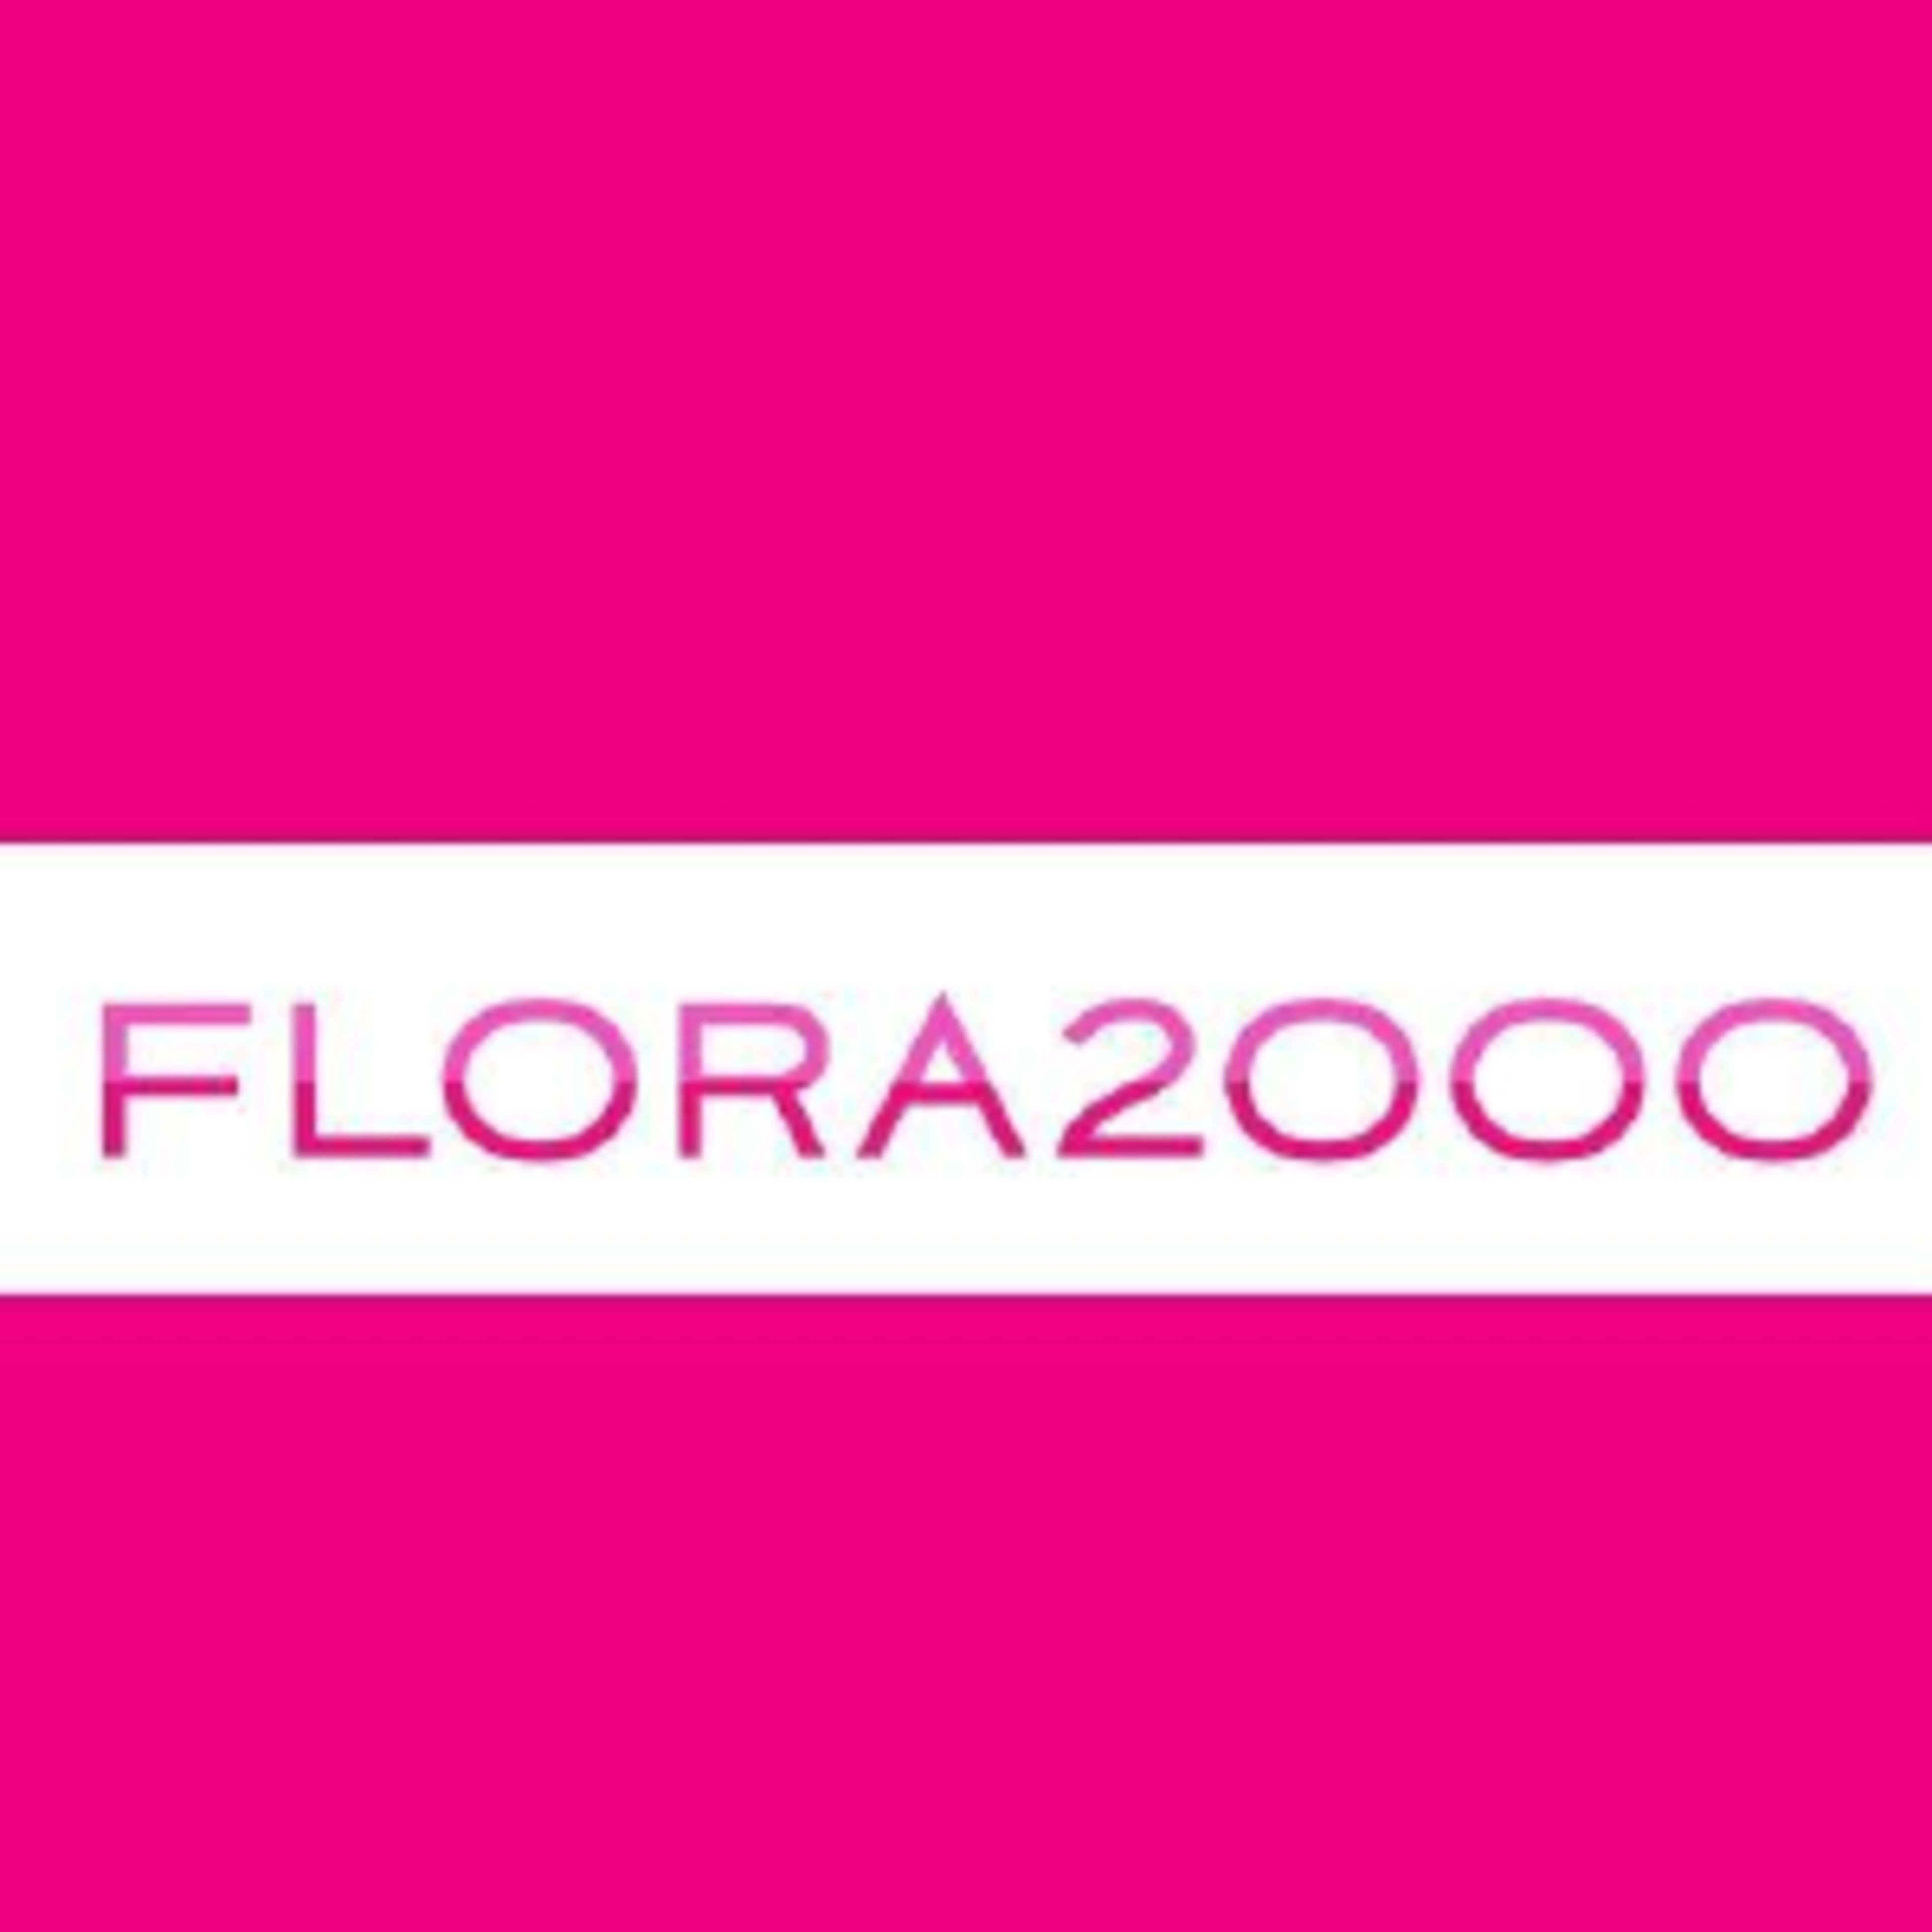 Flora2000 Code